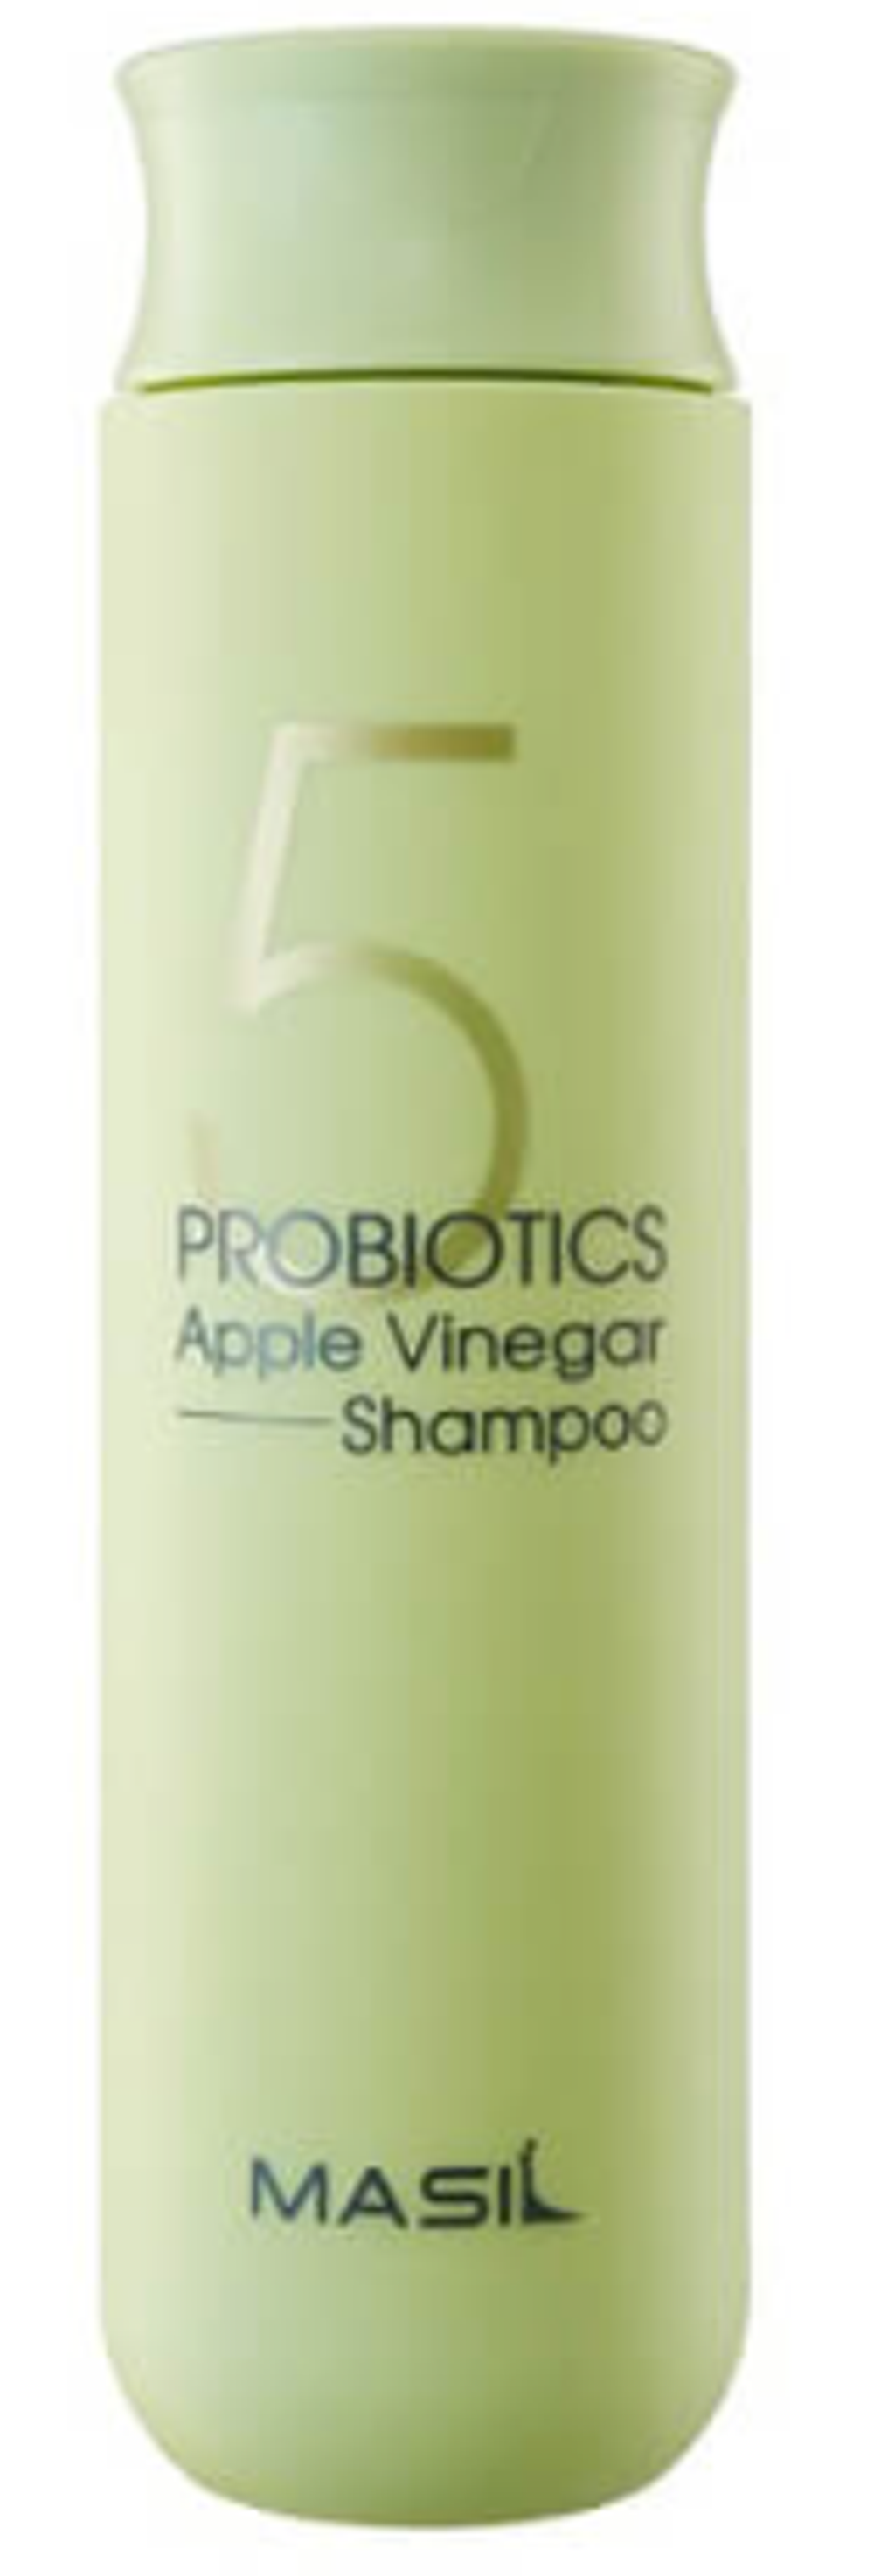 Masil 5 Probiotics Apple Vinegar Shampoo шампунь для волос 300мл